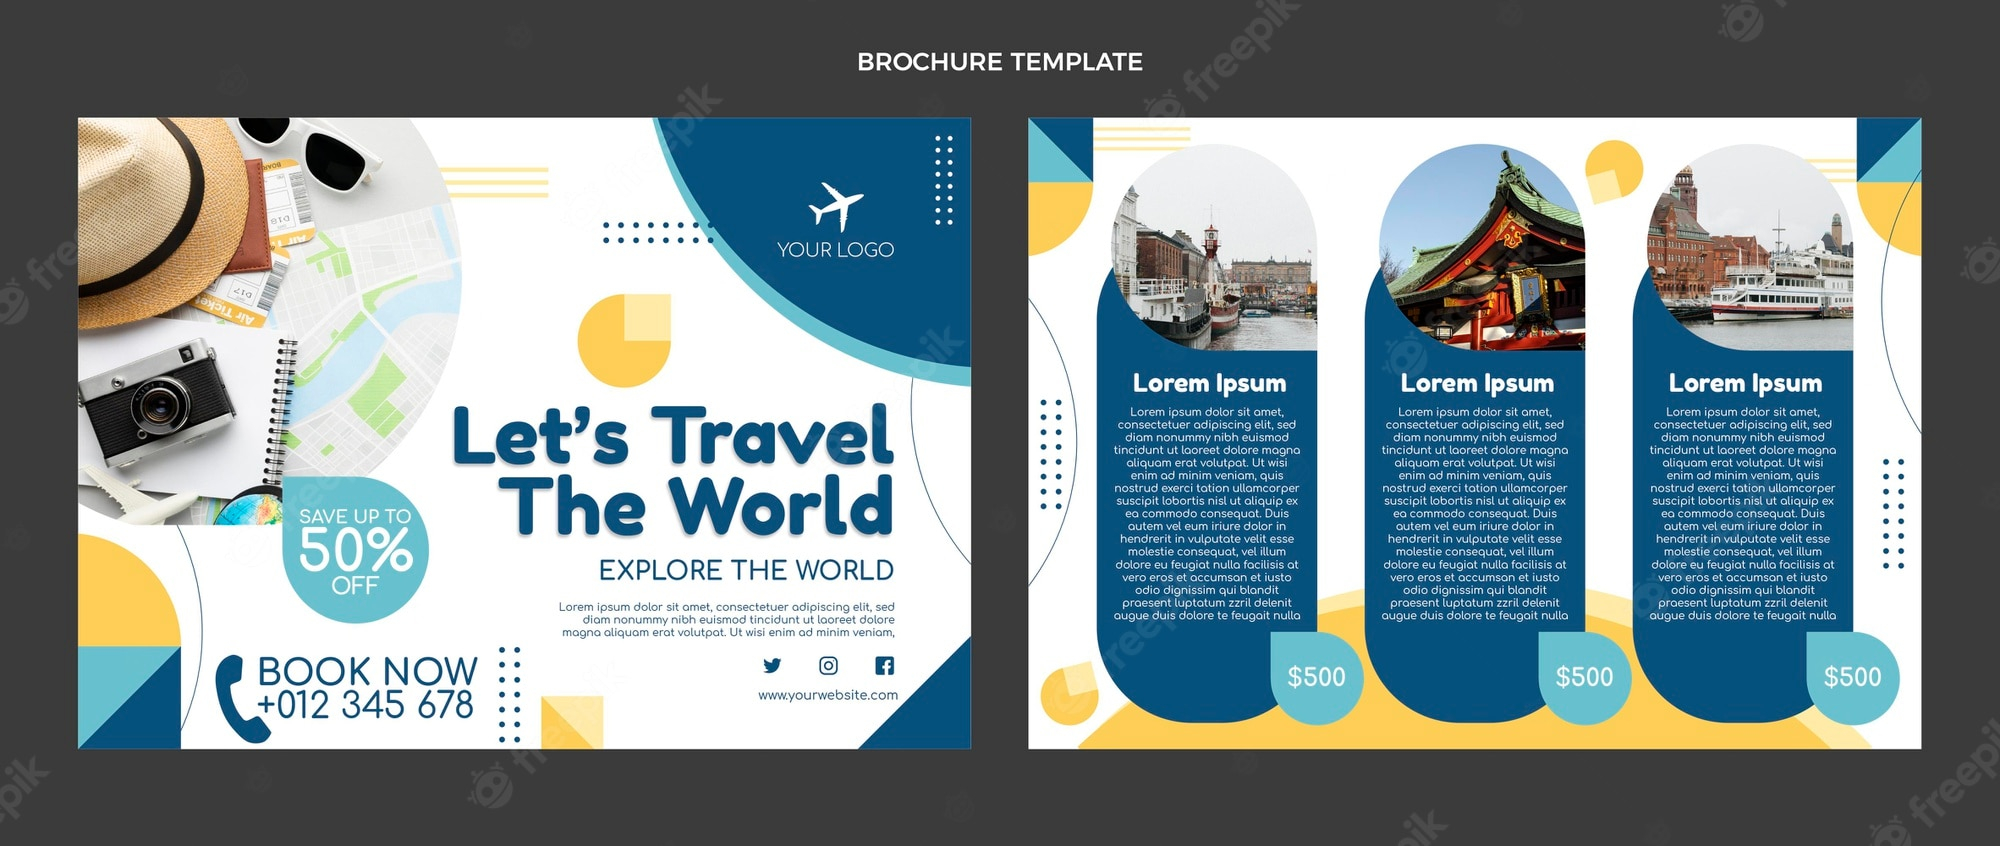 Travel brochure template Vectors & Illustrations for Free Download